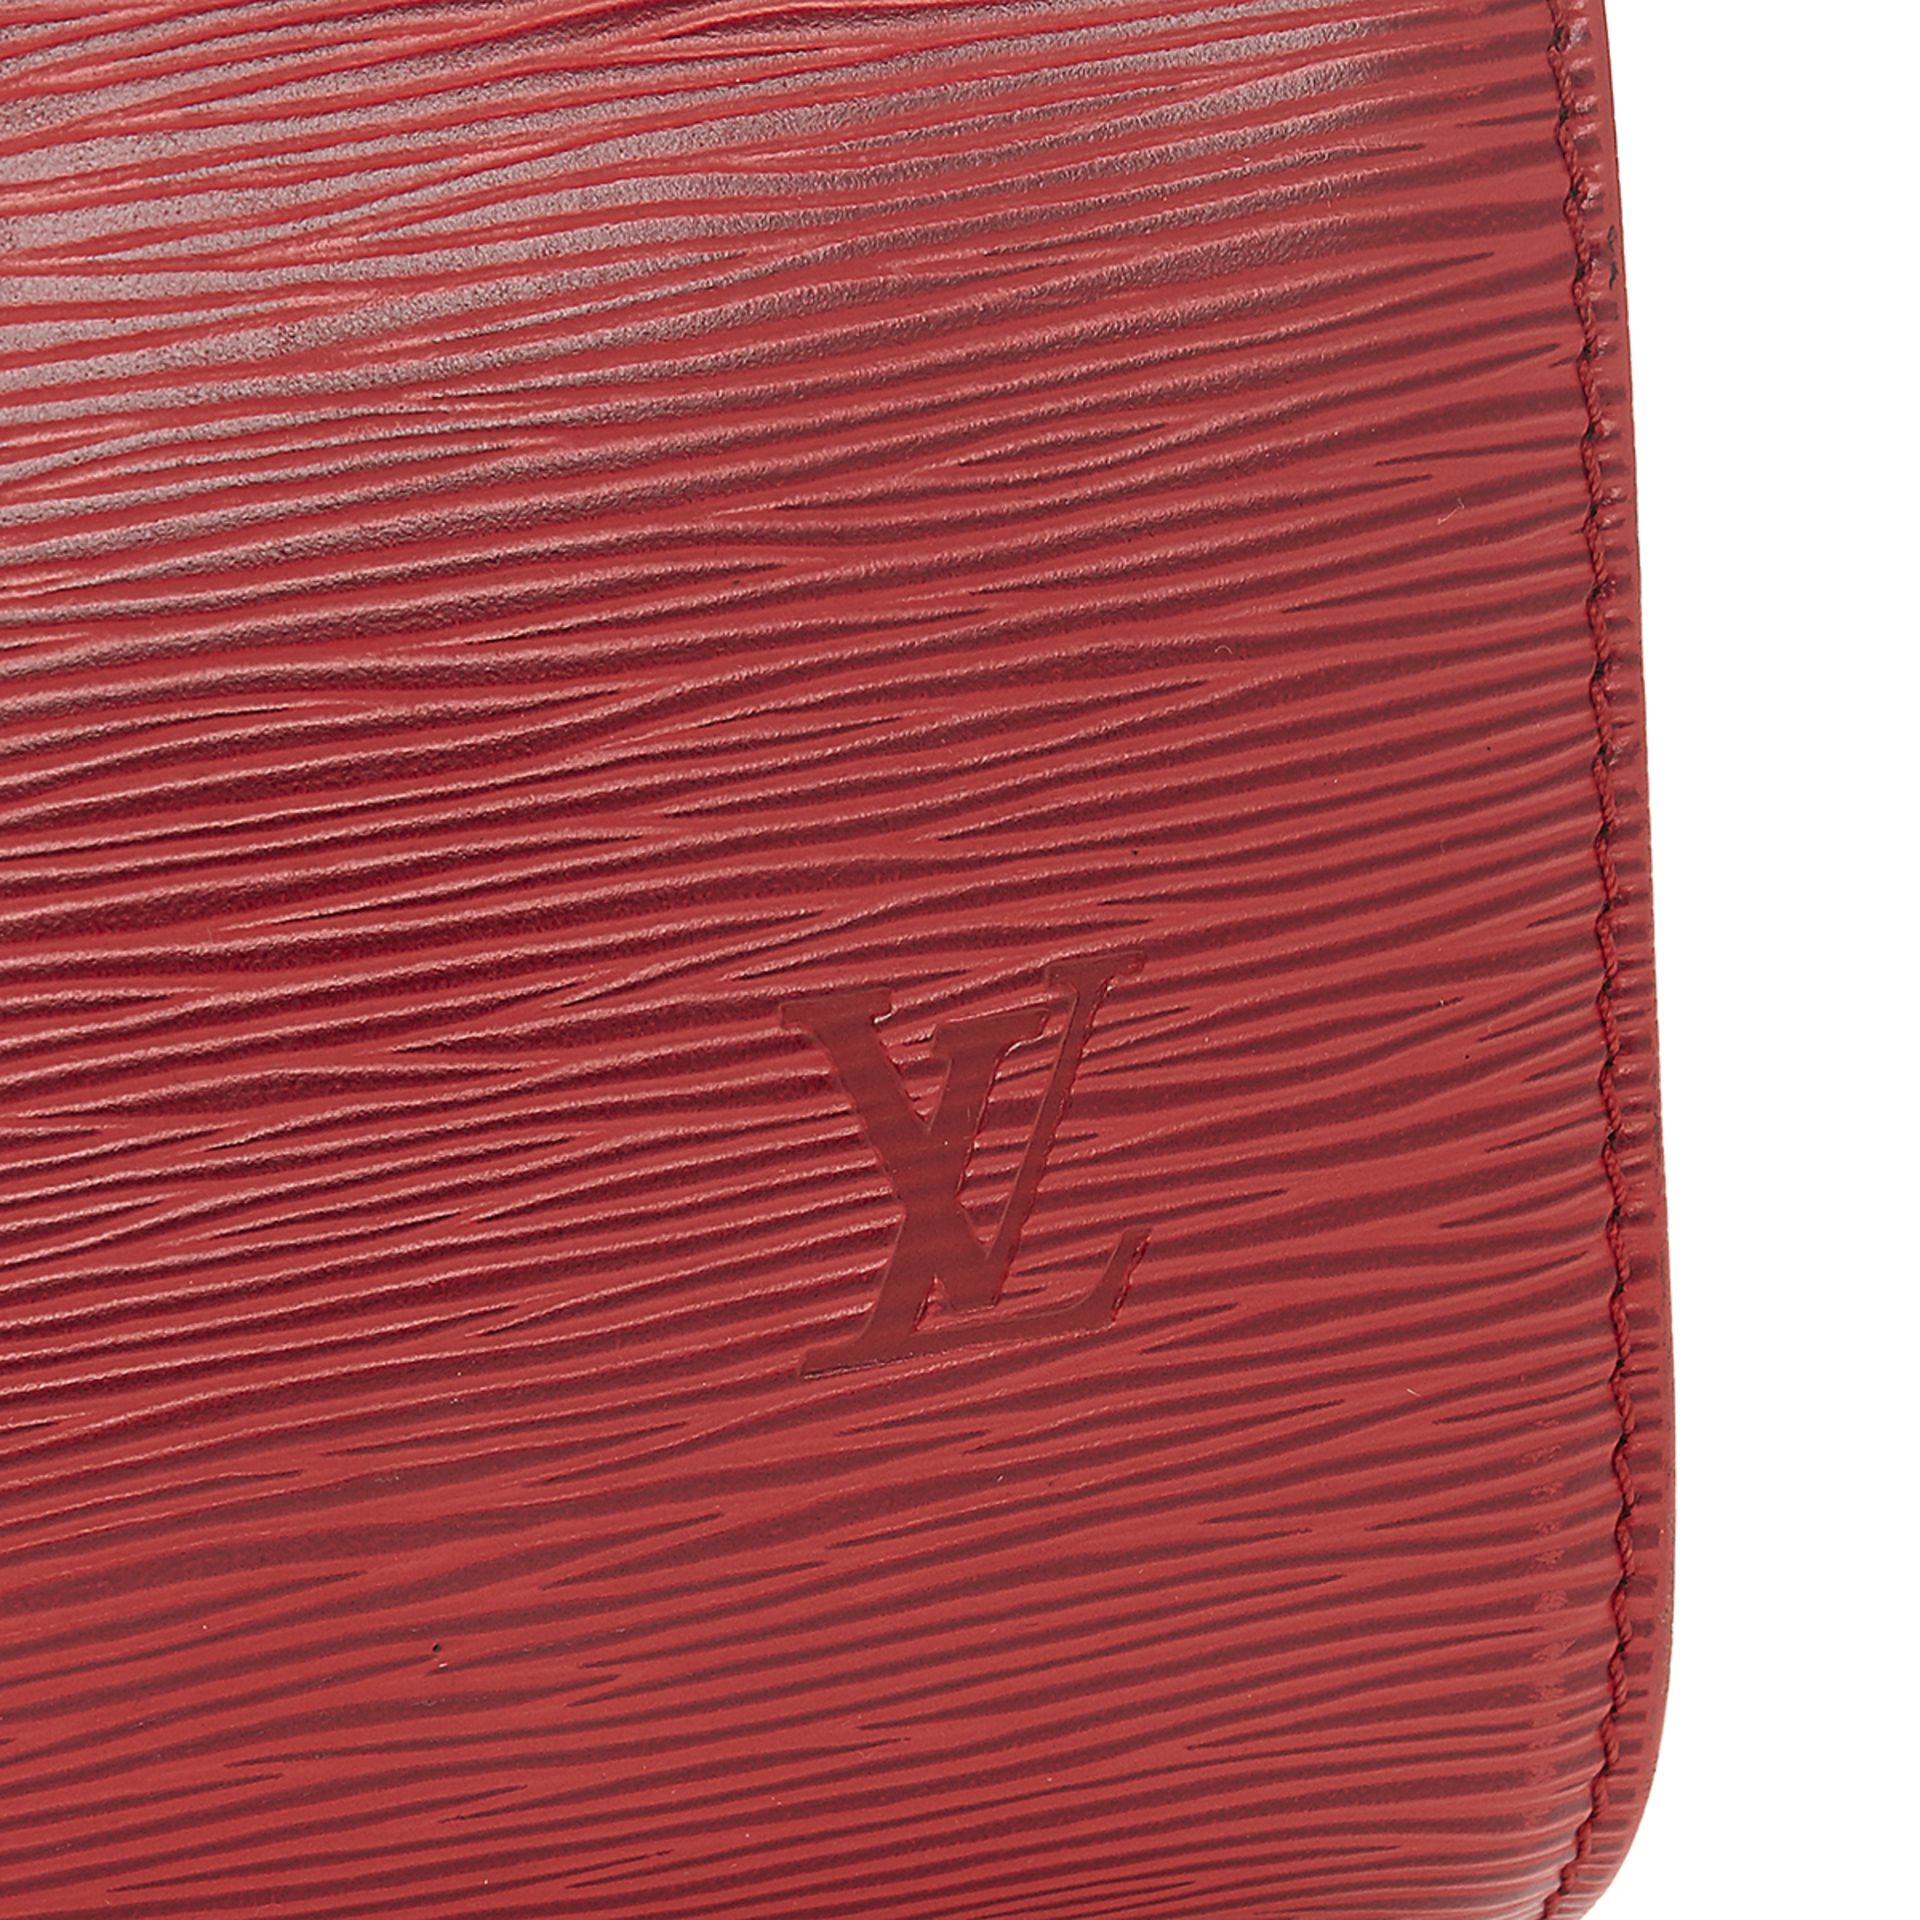 Louis Vuitton, Speedy 25 - Image 6 of 8